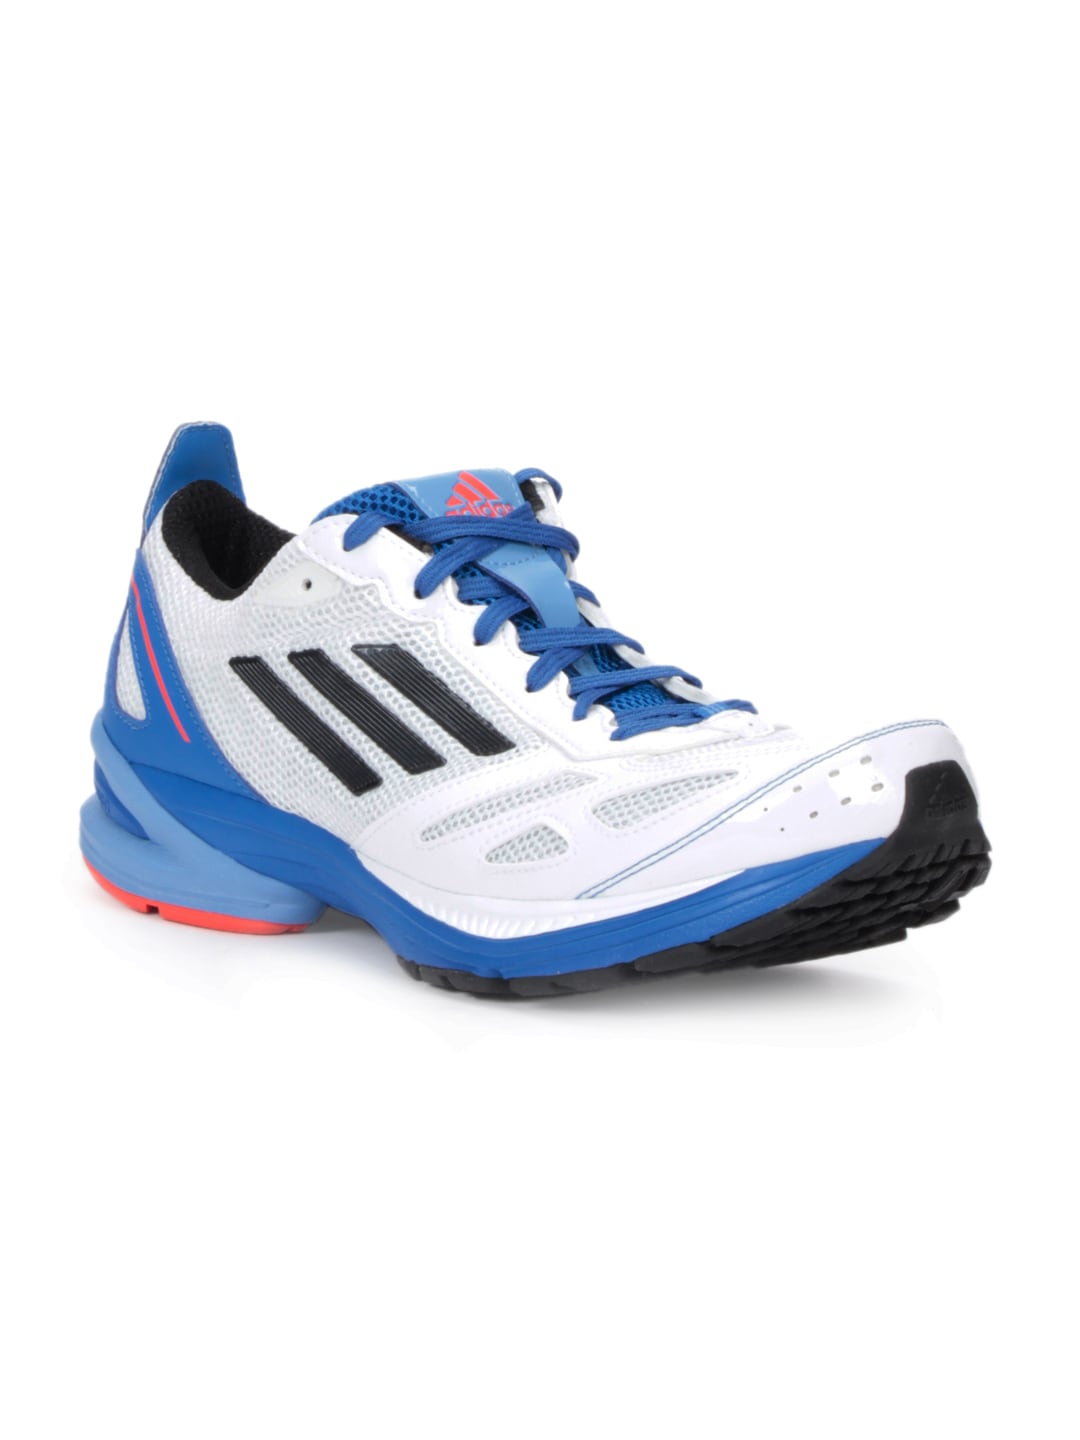 ADIDAS Men Runner White & Blue Sports Shoes